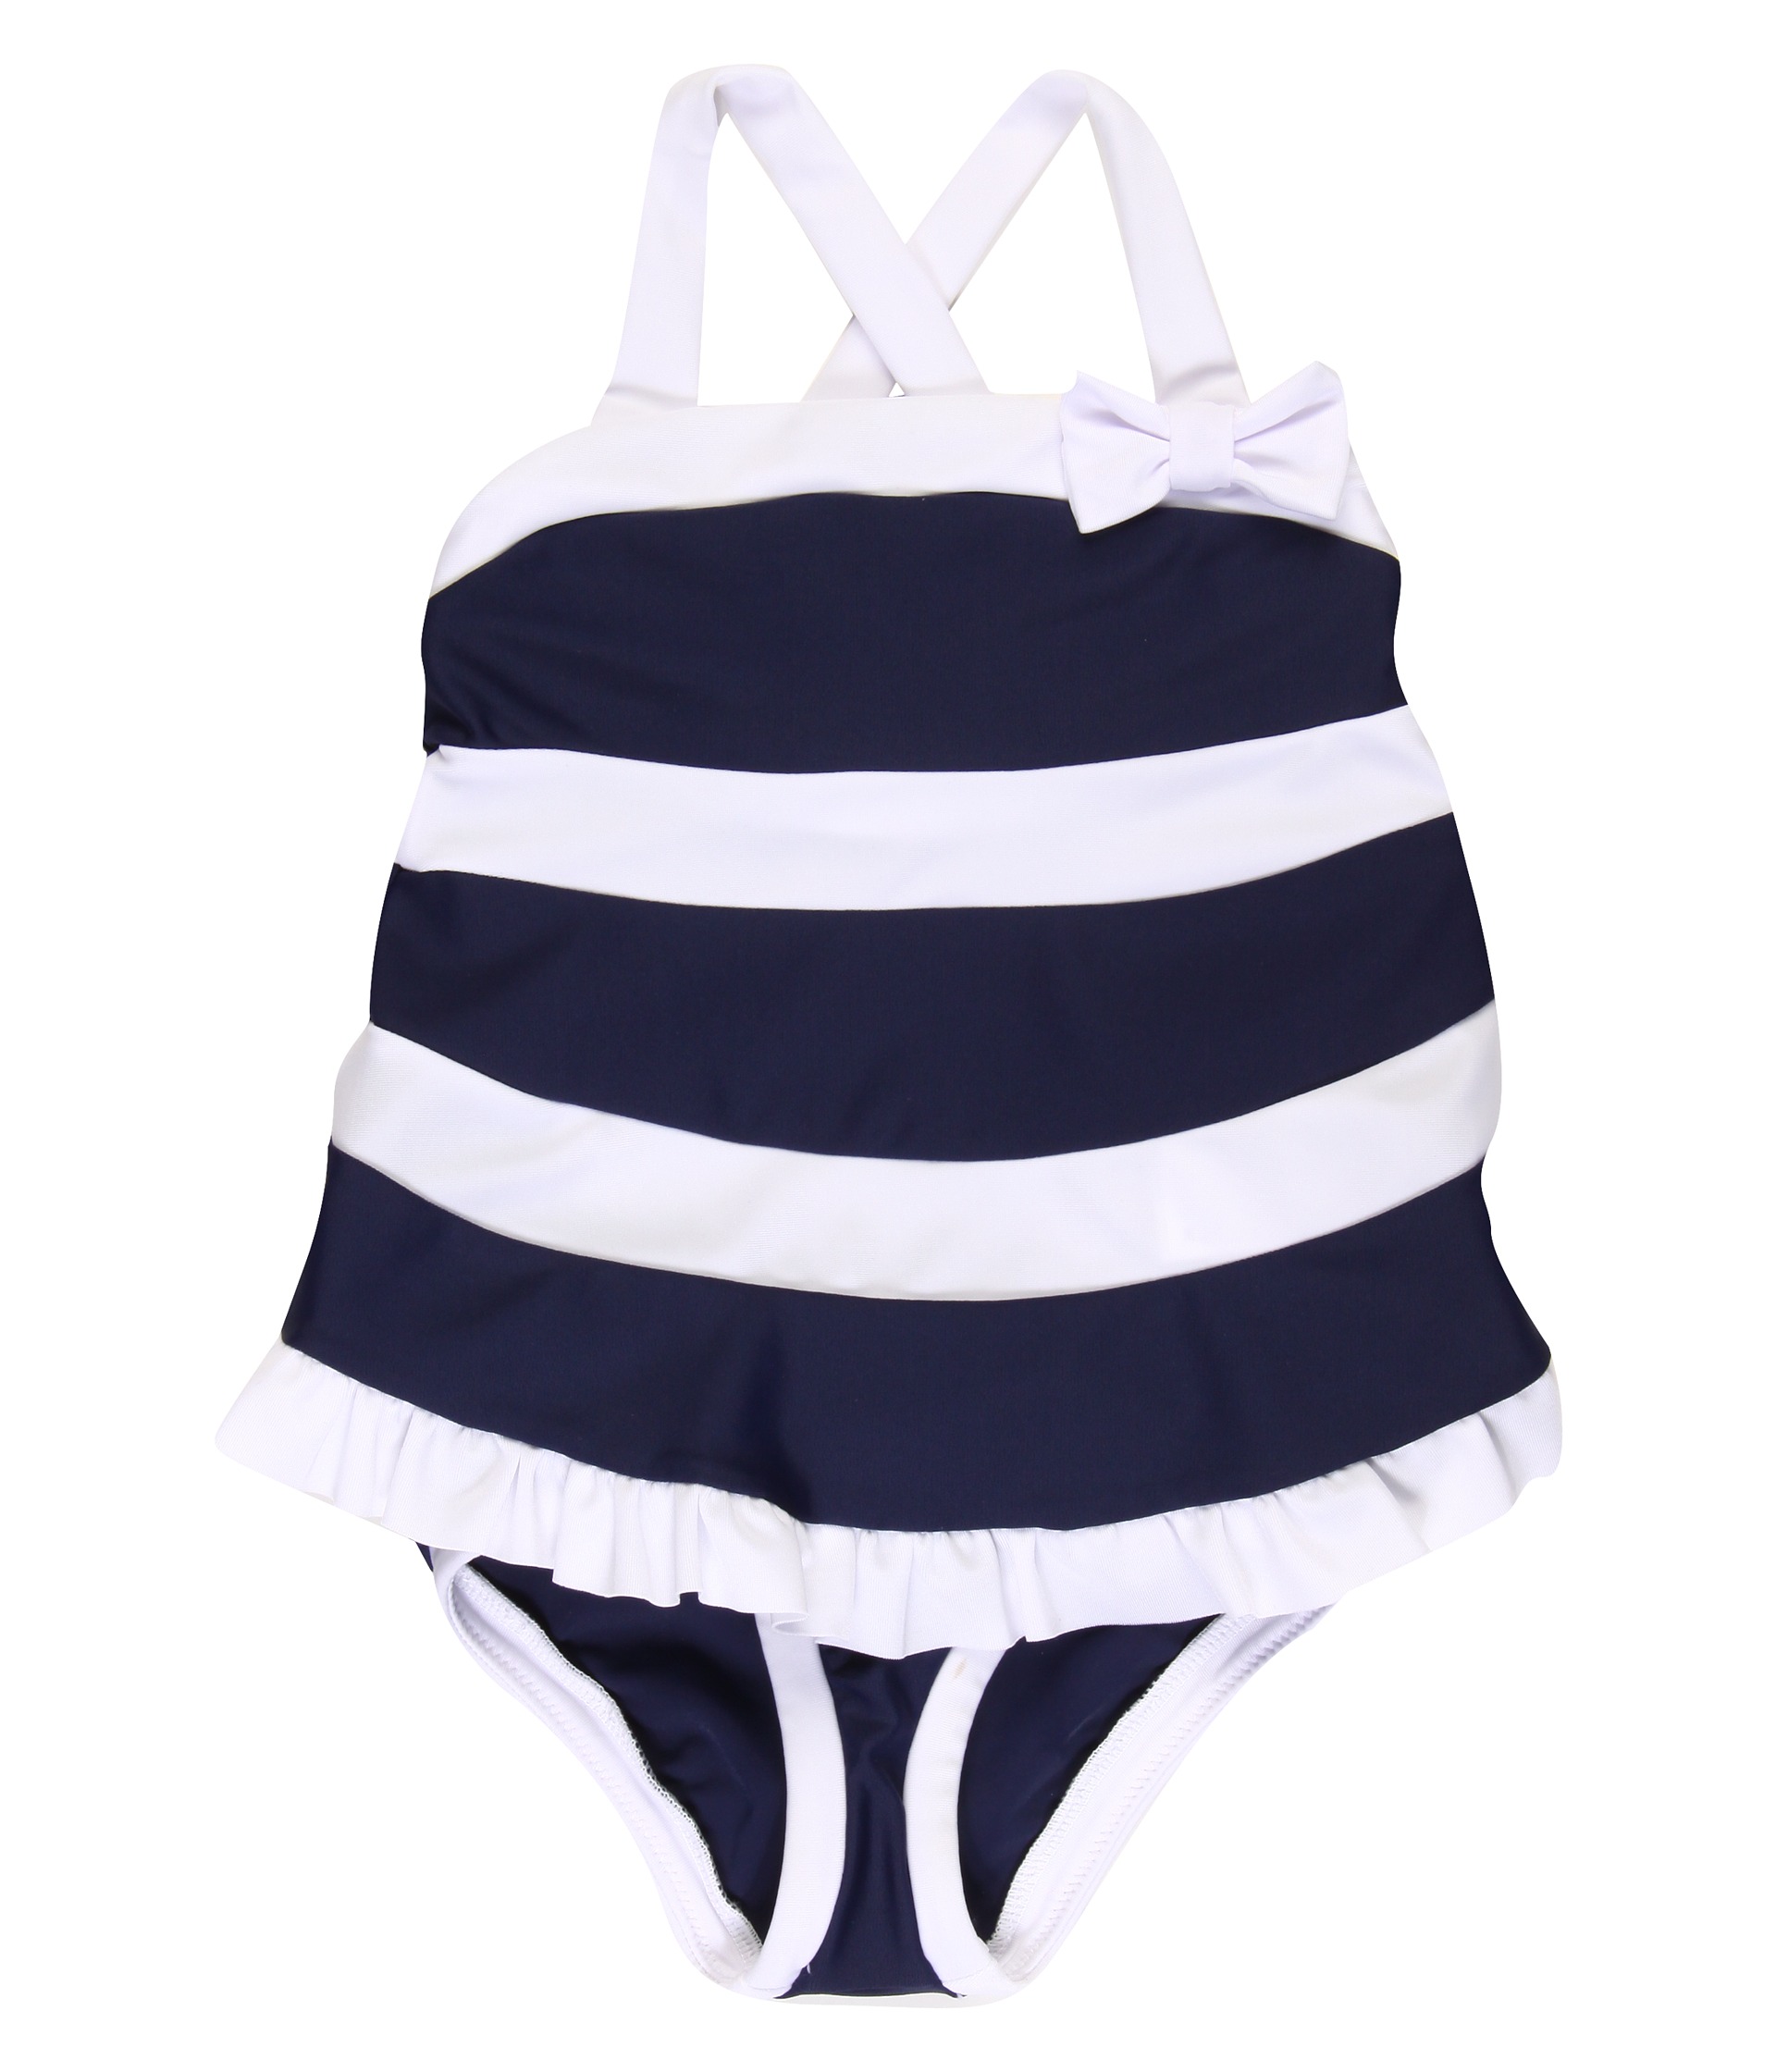 Seafolly Kids Yacht Club Singlet Bikini (Infant/Toddler/Little Kids 